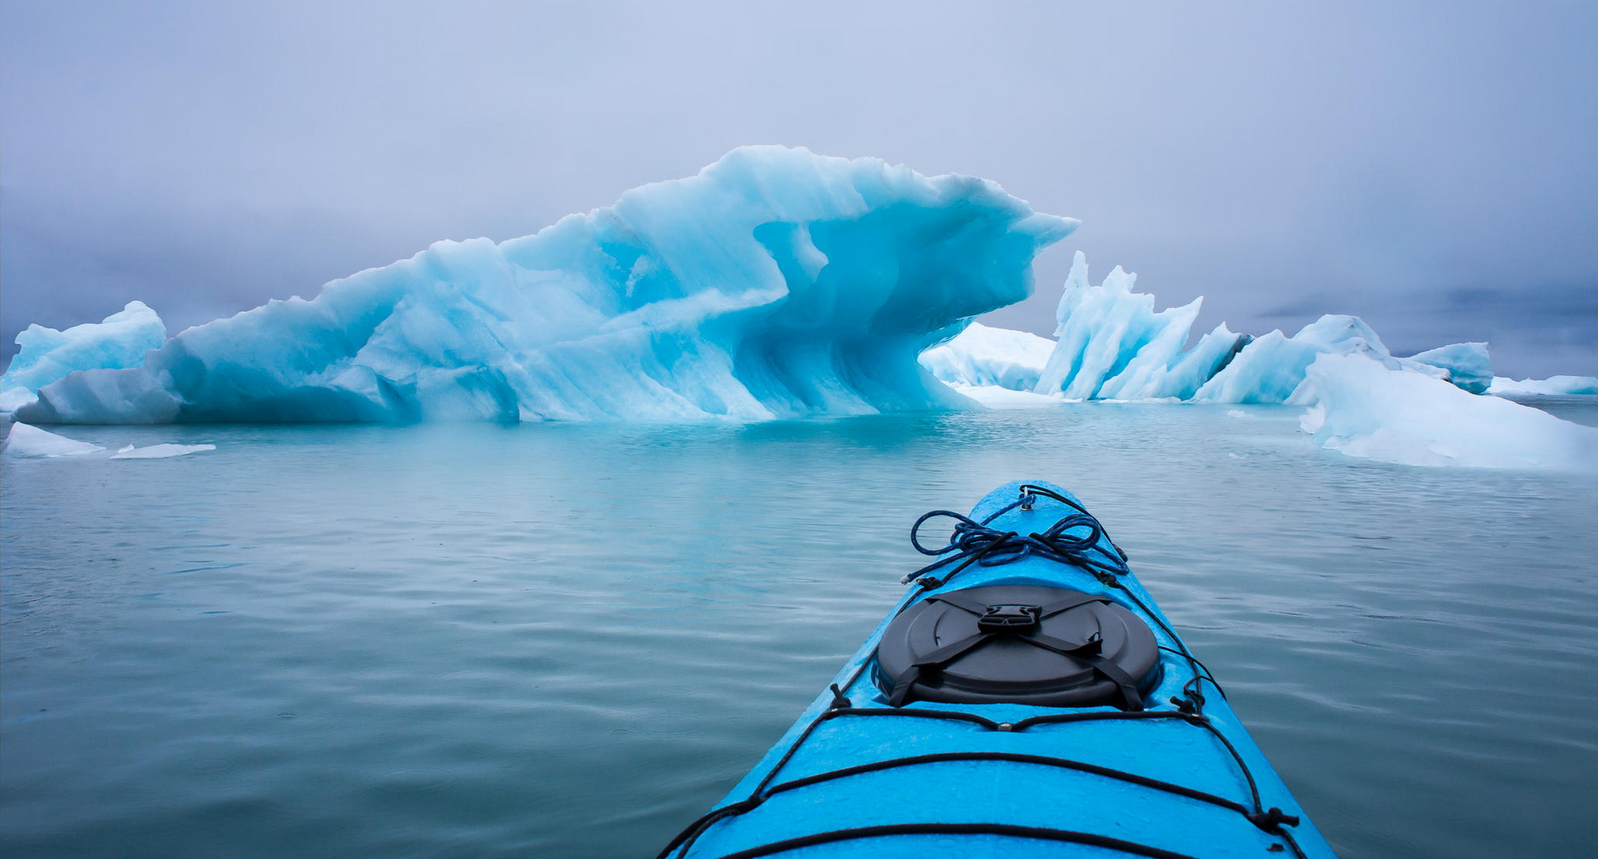 Kayaking Near An Iceberg